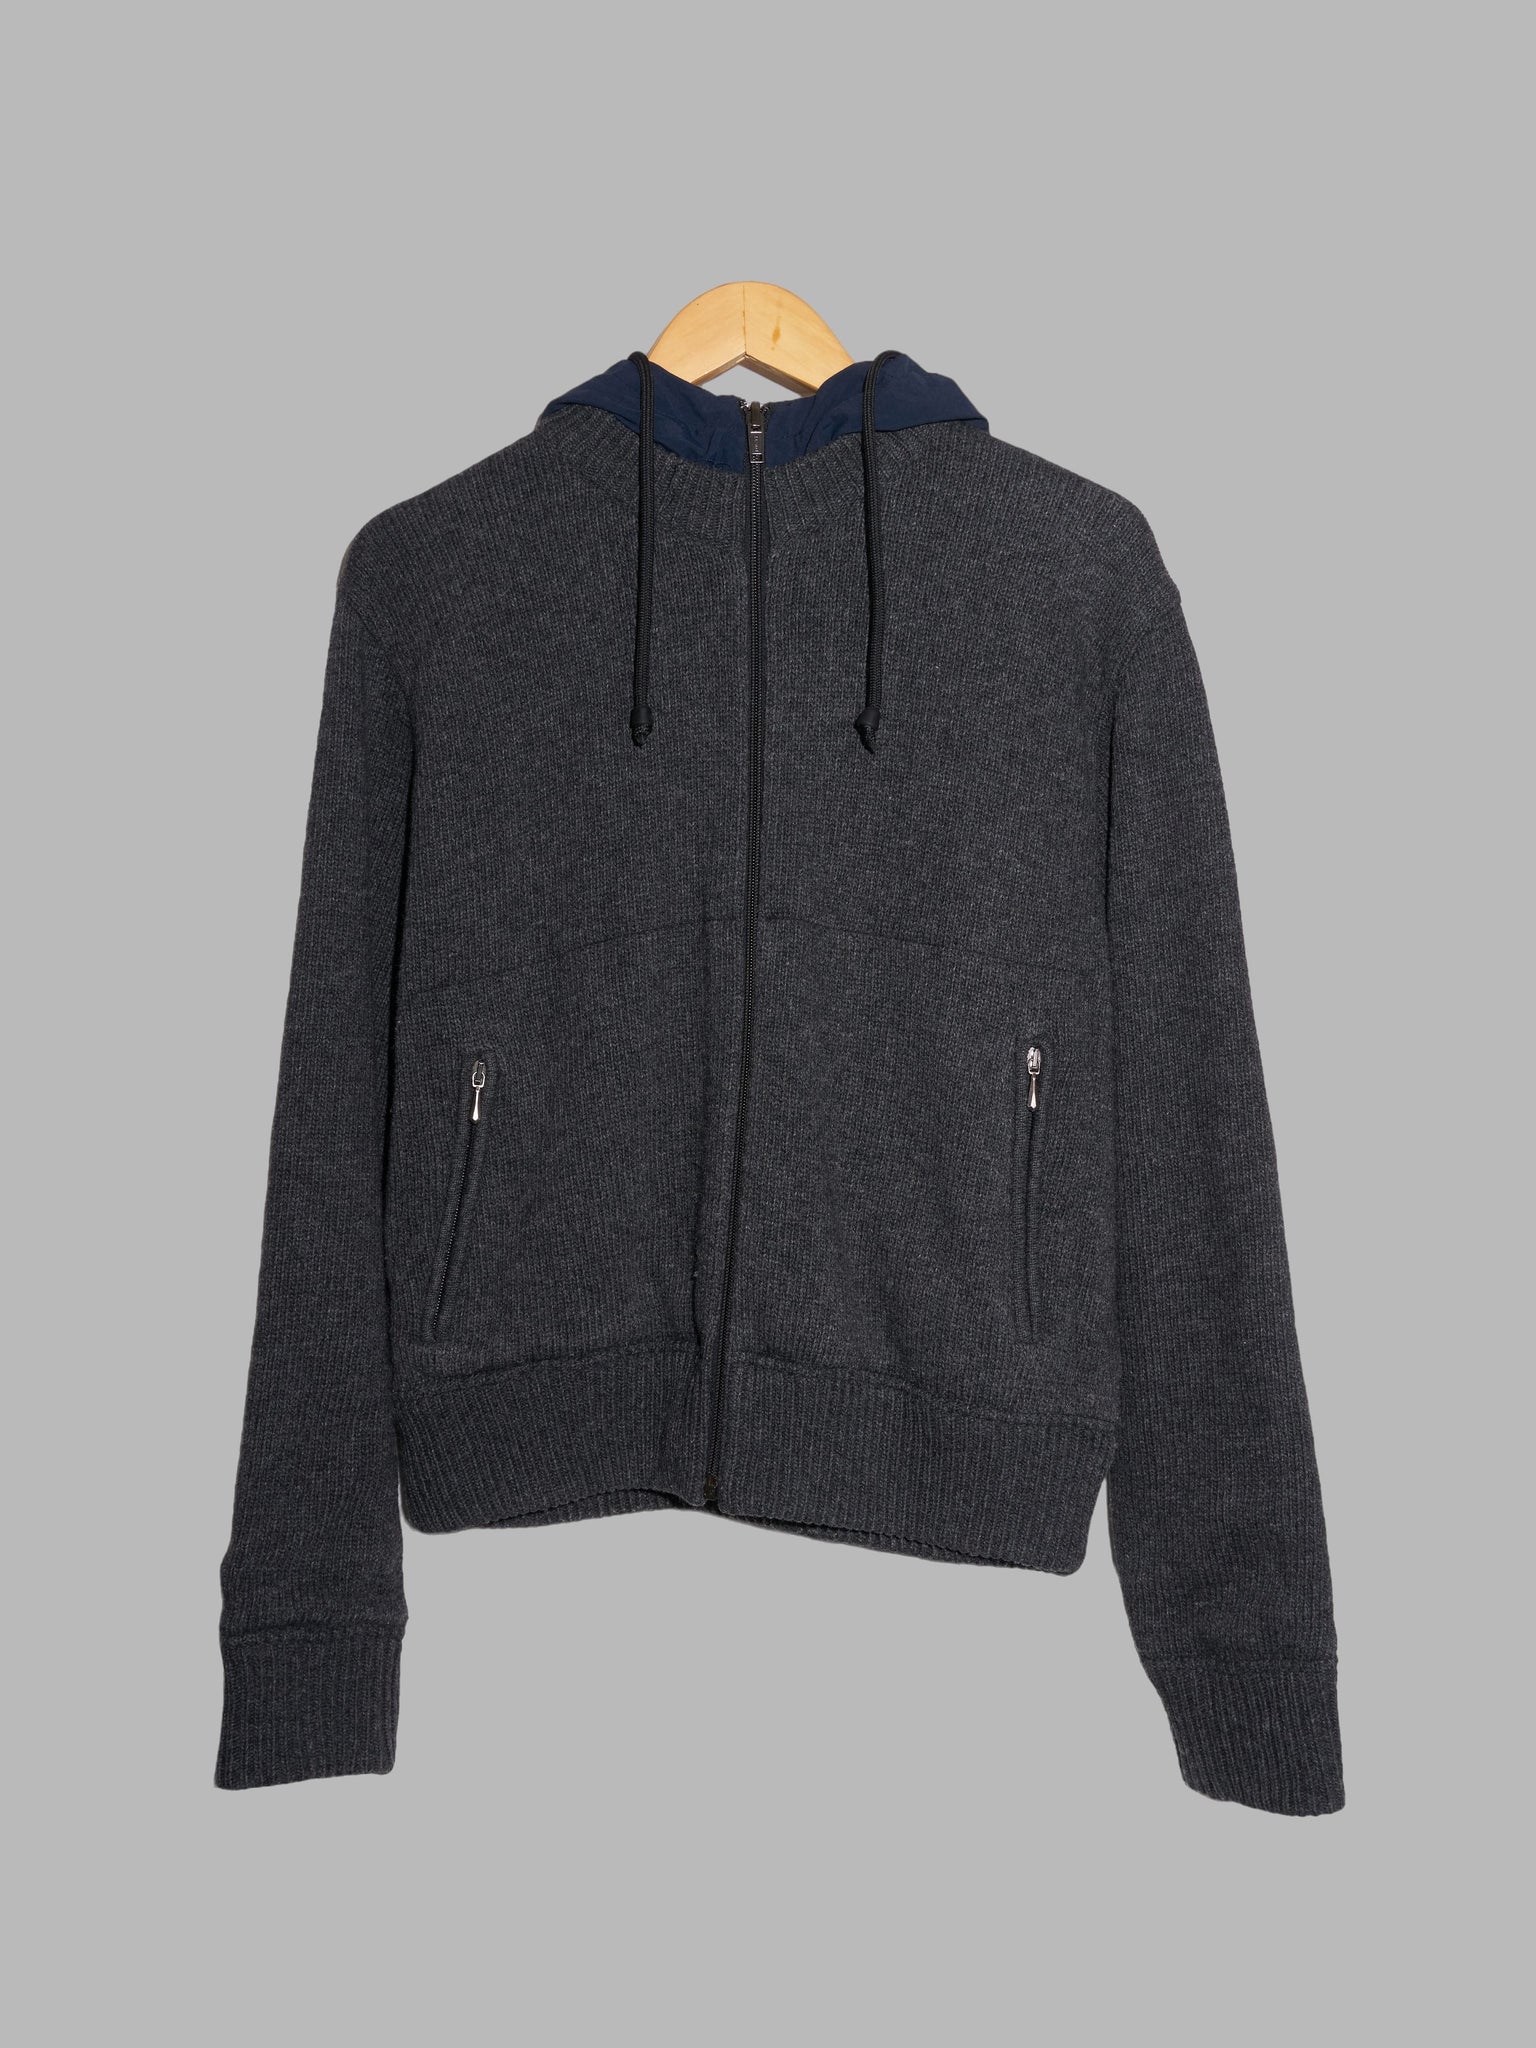 Dirk Bikkembergs 1990s 2000s grey wool layered knit hooded jacket - S